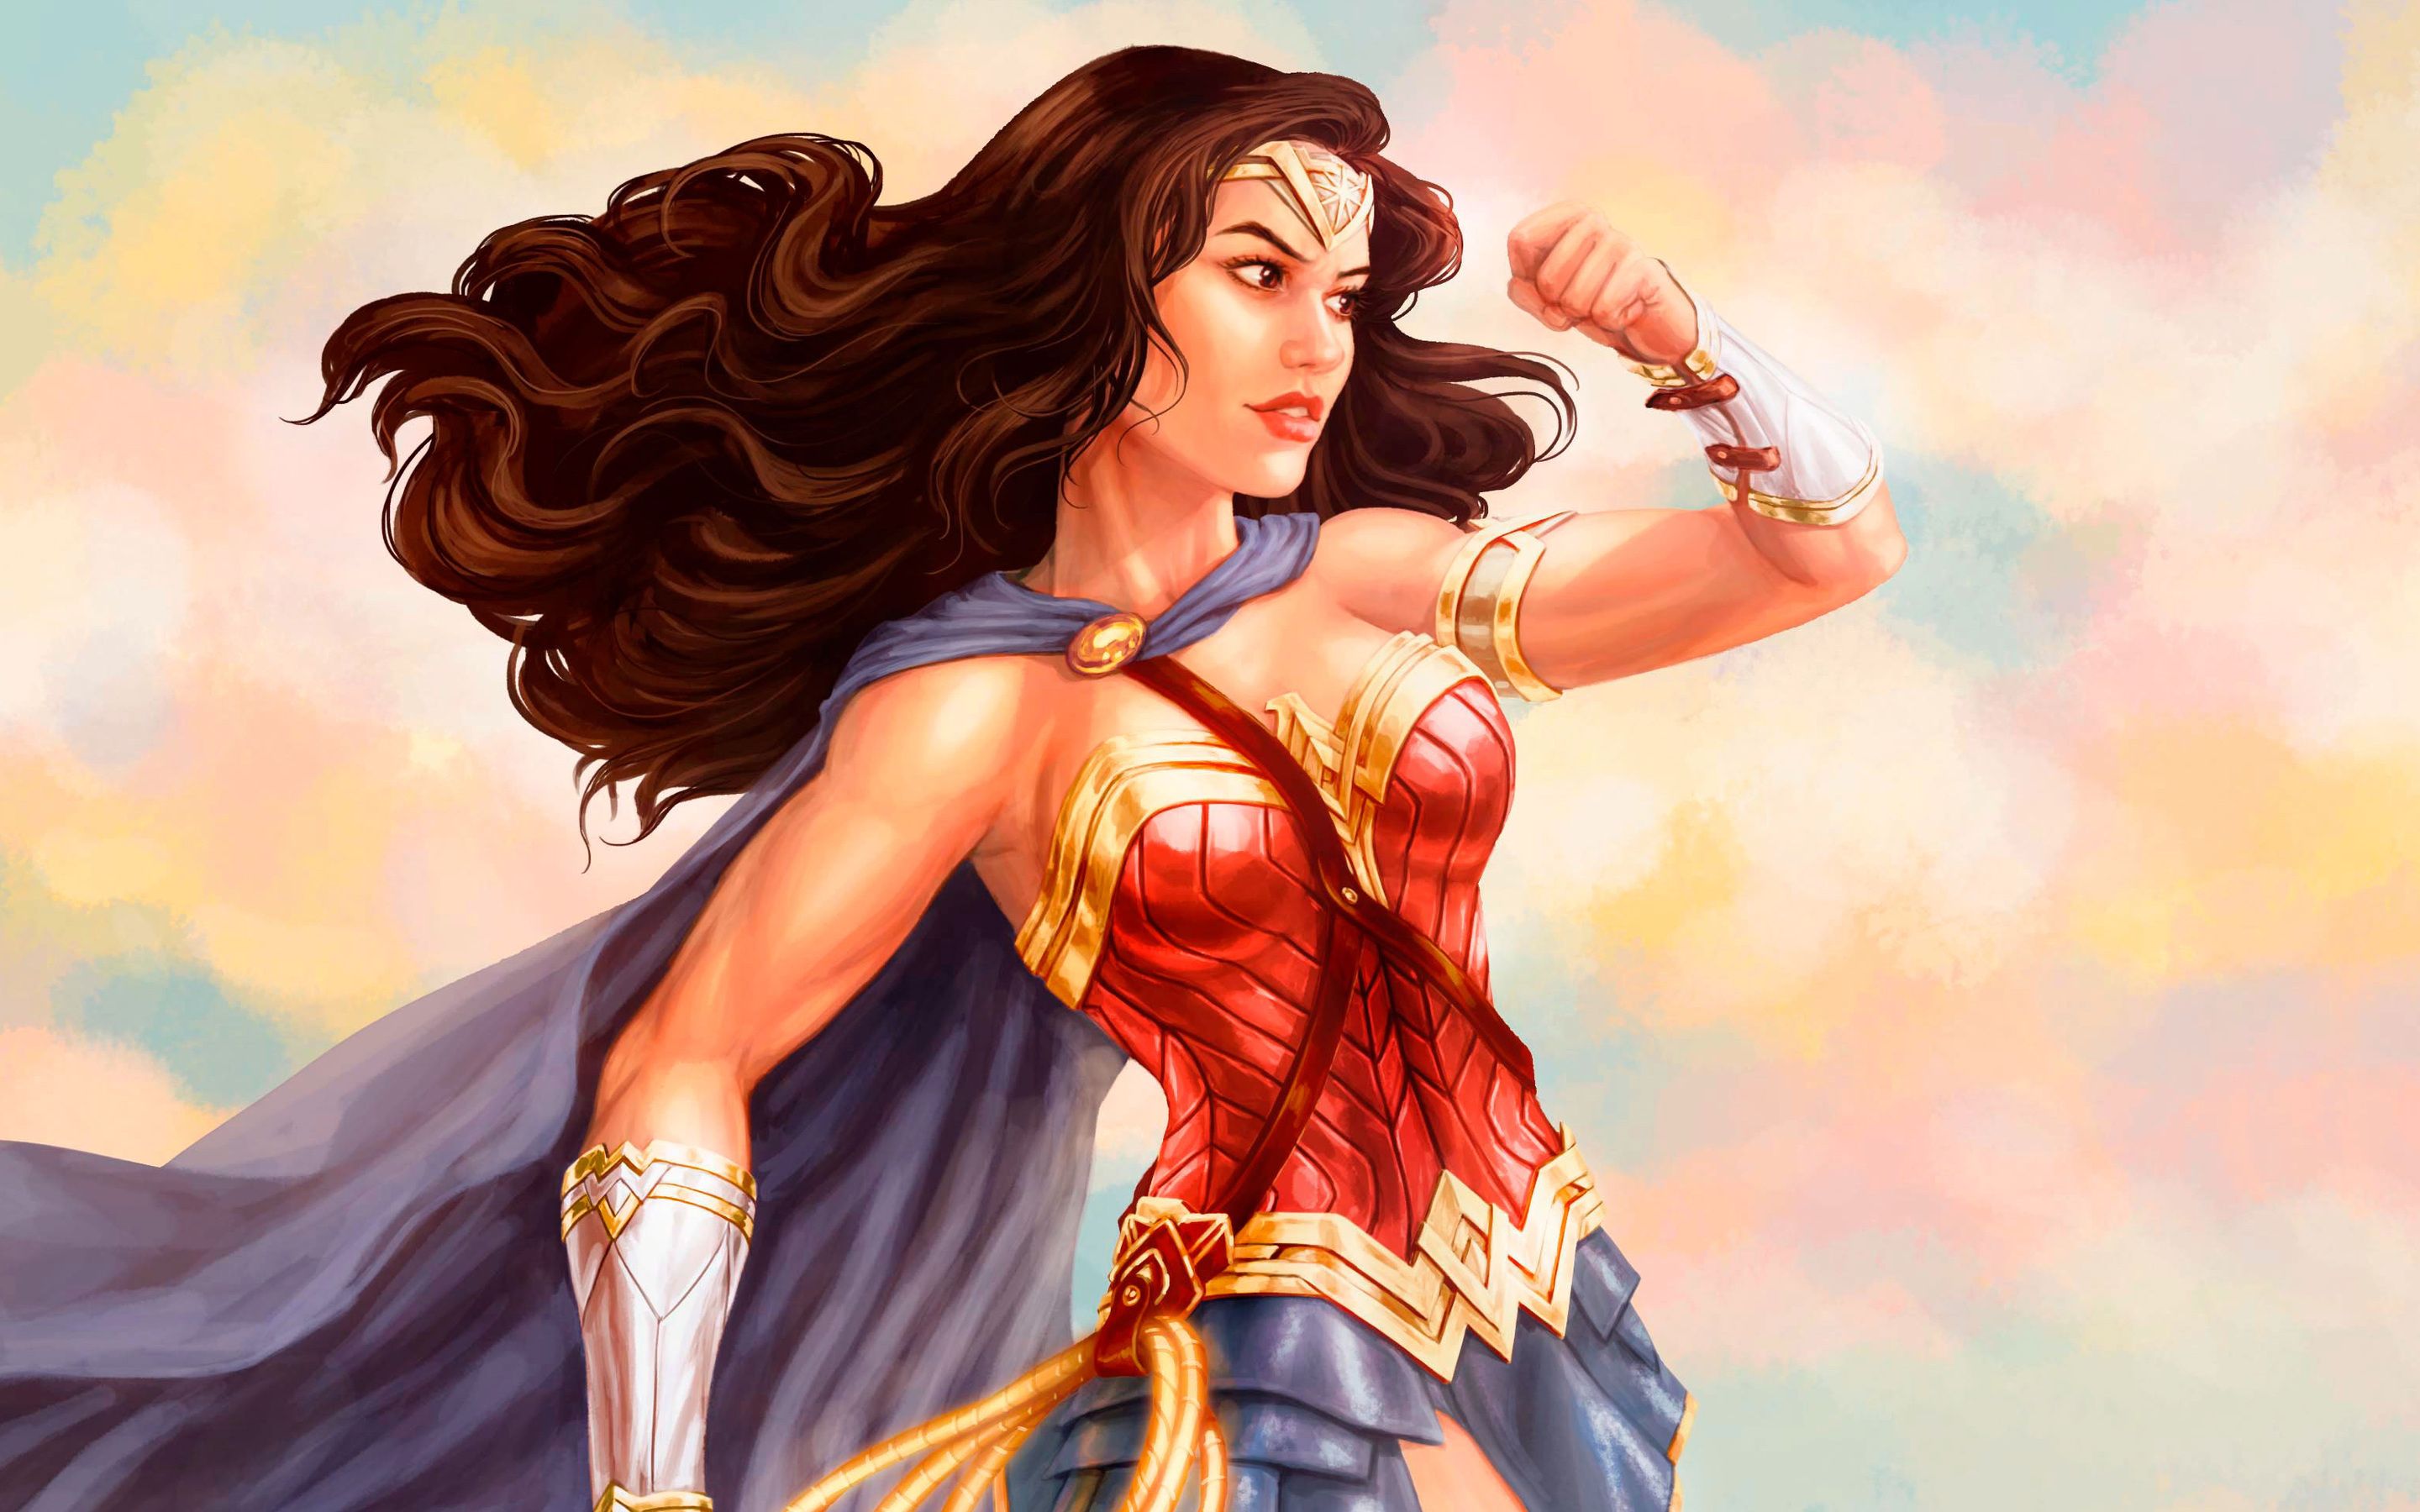 Wonder Woman Digital Art Macbook Pro Retina HD 4k Wallpaper, Image, Background, Photo and Picture